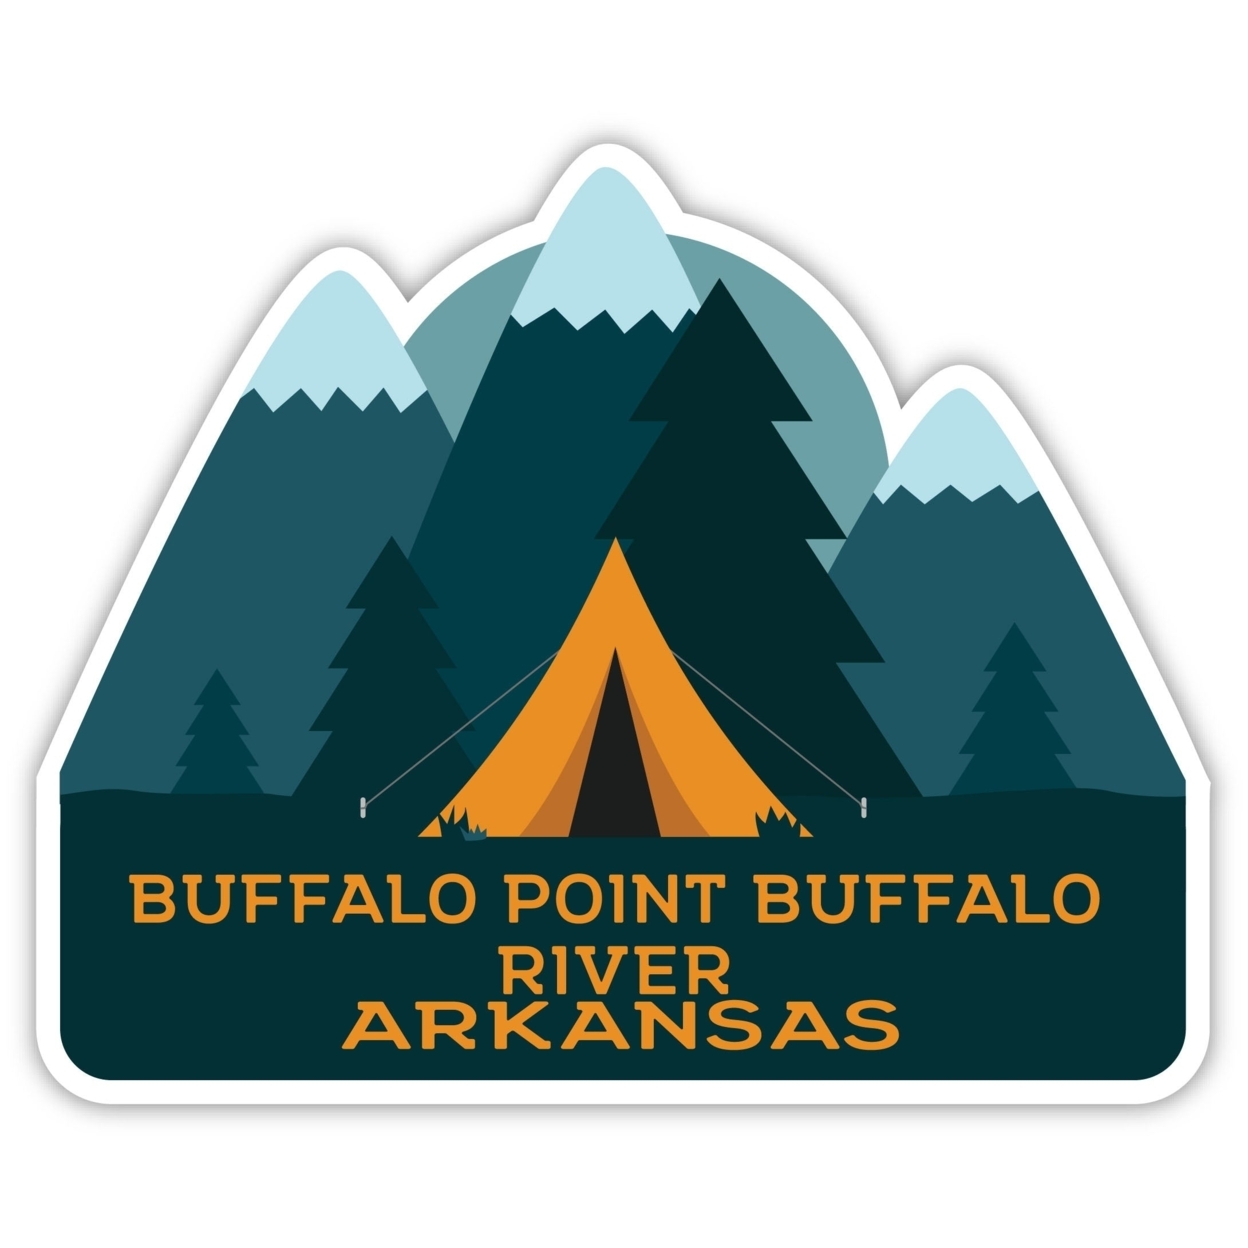 Buffalo Point Buffalo River Arkansas Souvenir Decorative Stickers (Choose Theme And Size) - Single Unit, 12-Inch, Camp Life